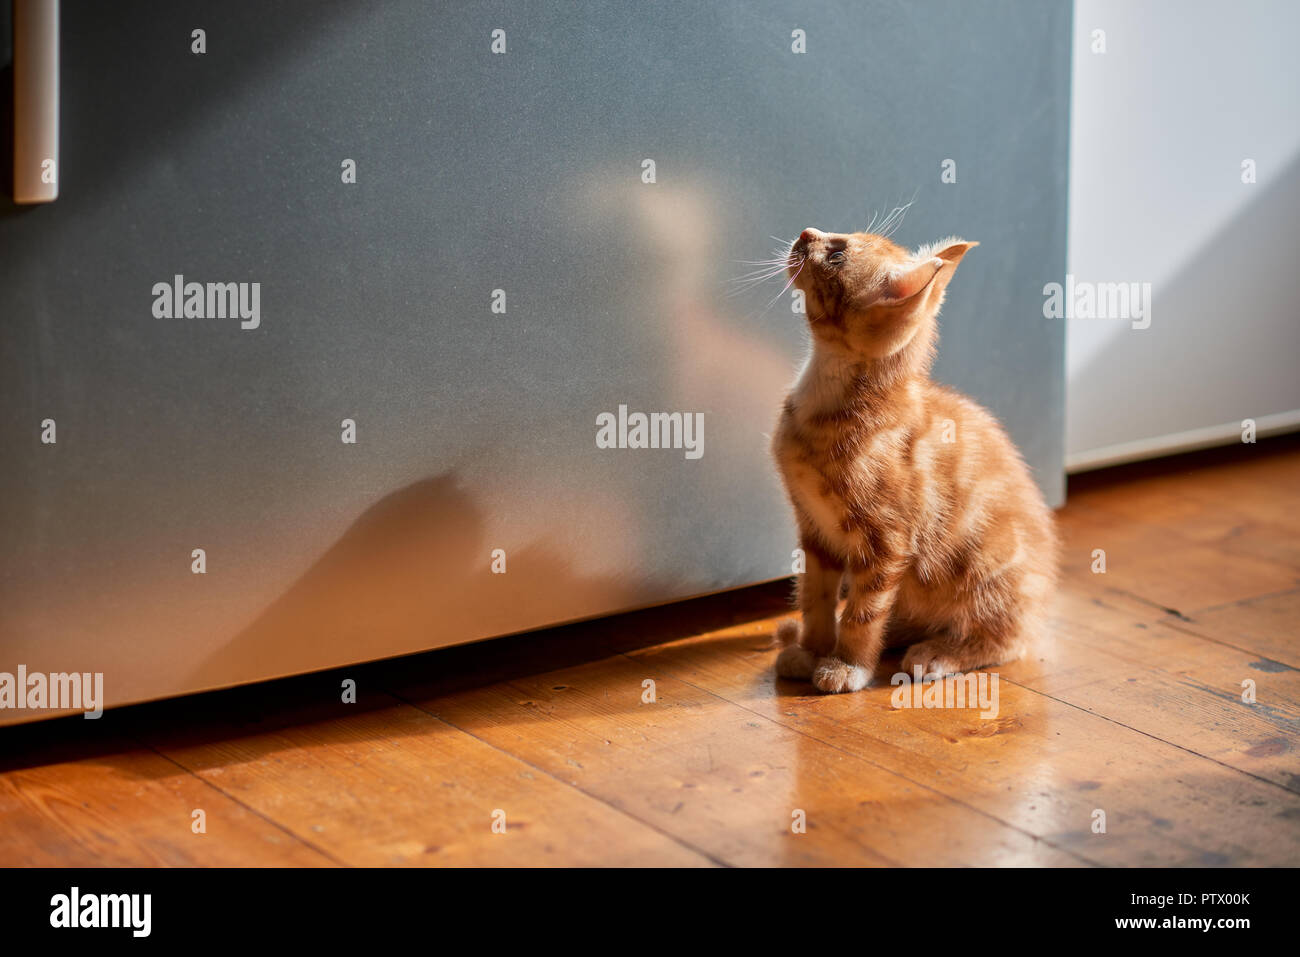 Gorgeous ginger tabby kitten sitting on a kitchen floor looking up a fridge. Stock Photo